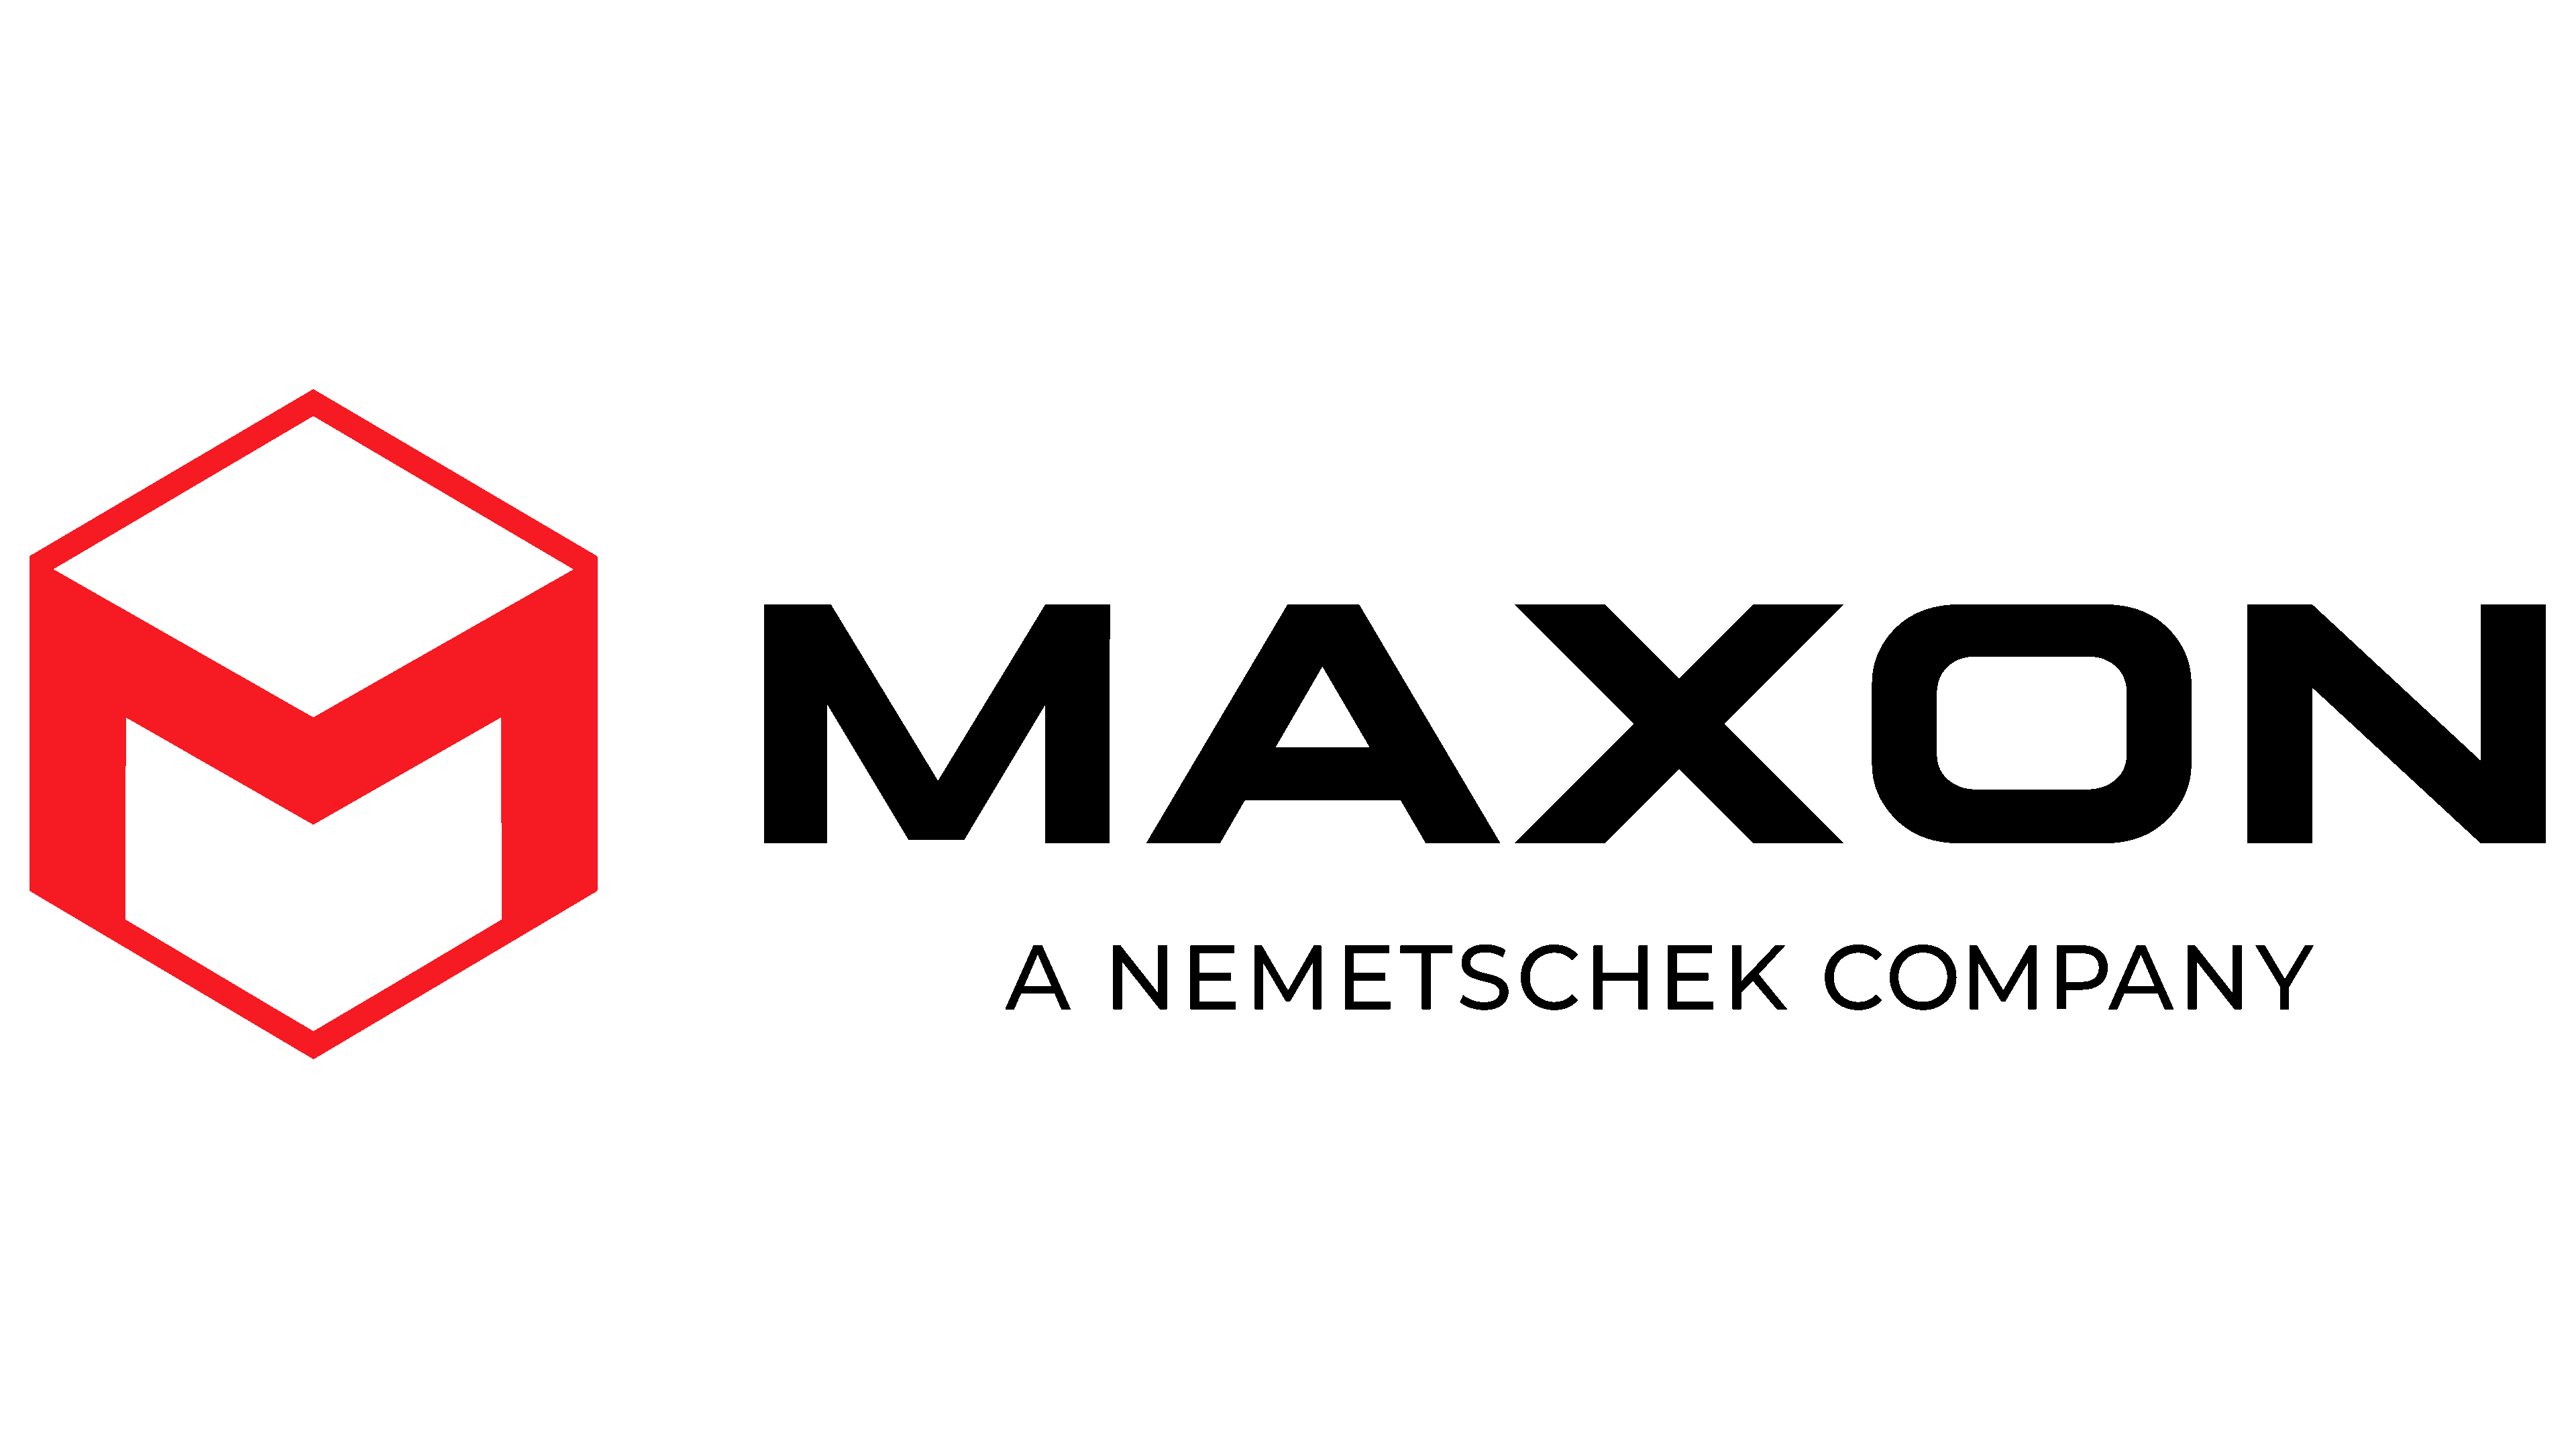 Maxon unveils a new logo design